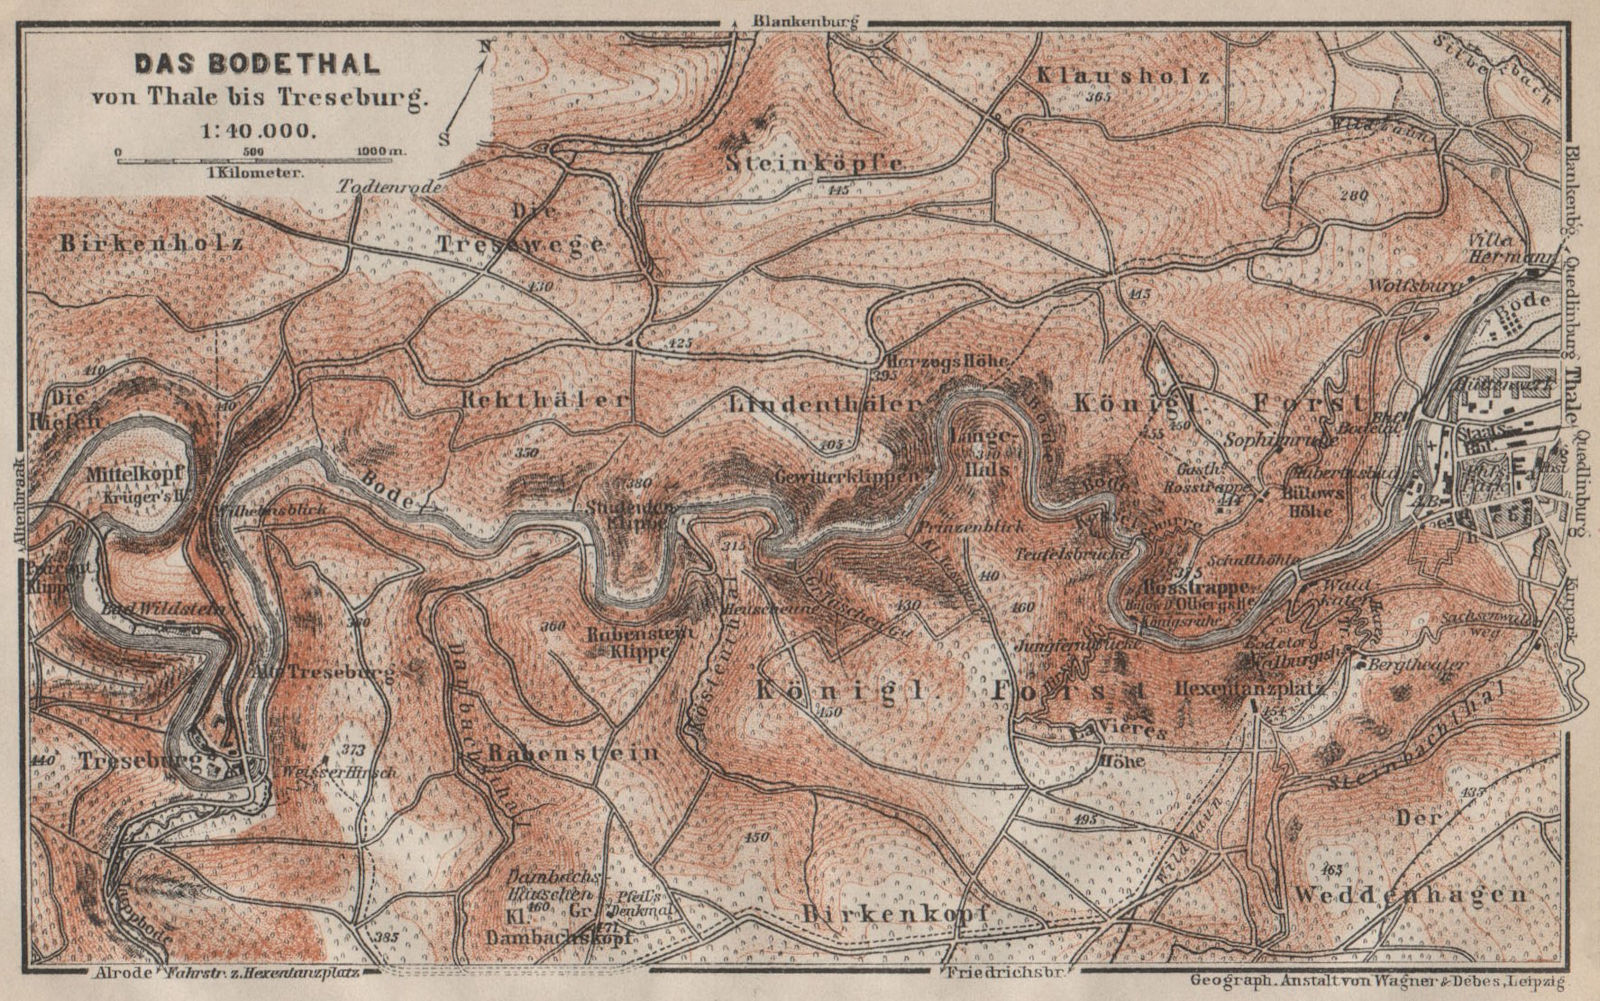 Associate Product DAS BODETHAL von Thale bis Treseburg. Bode Gorge topo-map. Harz karte 1910